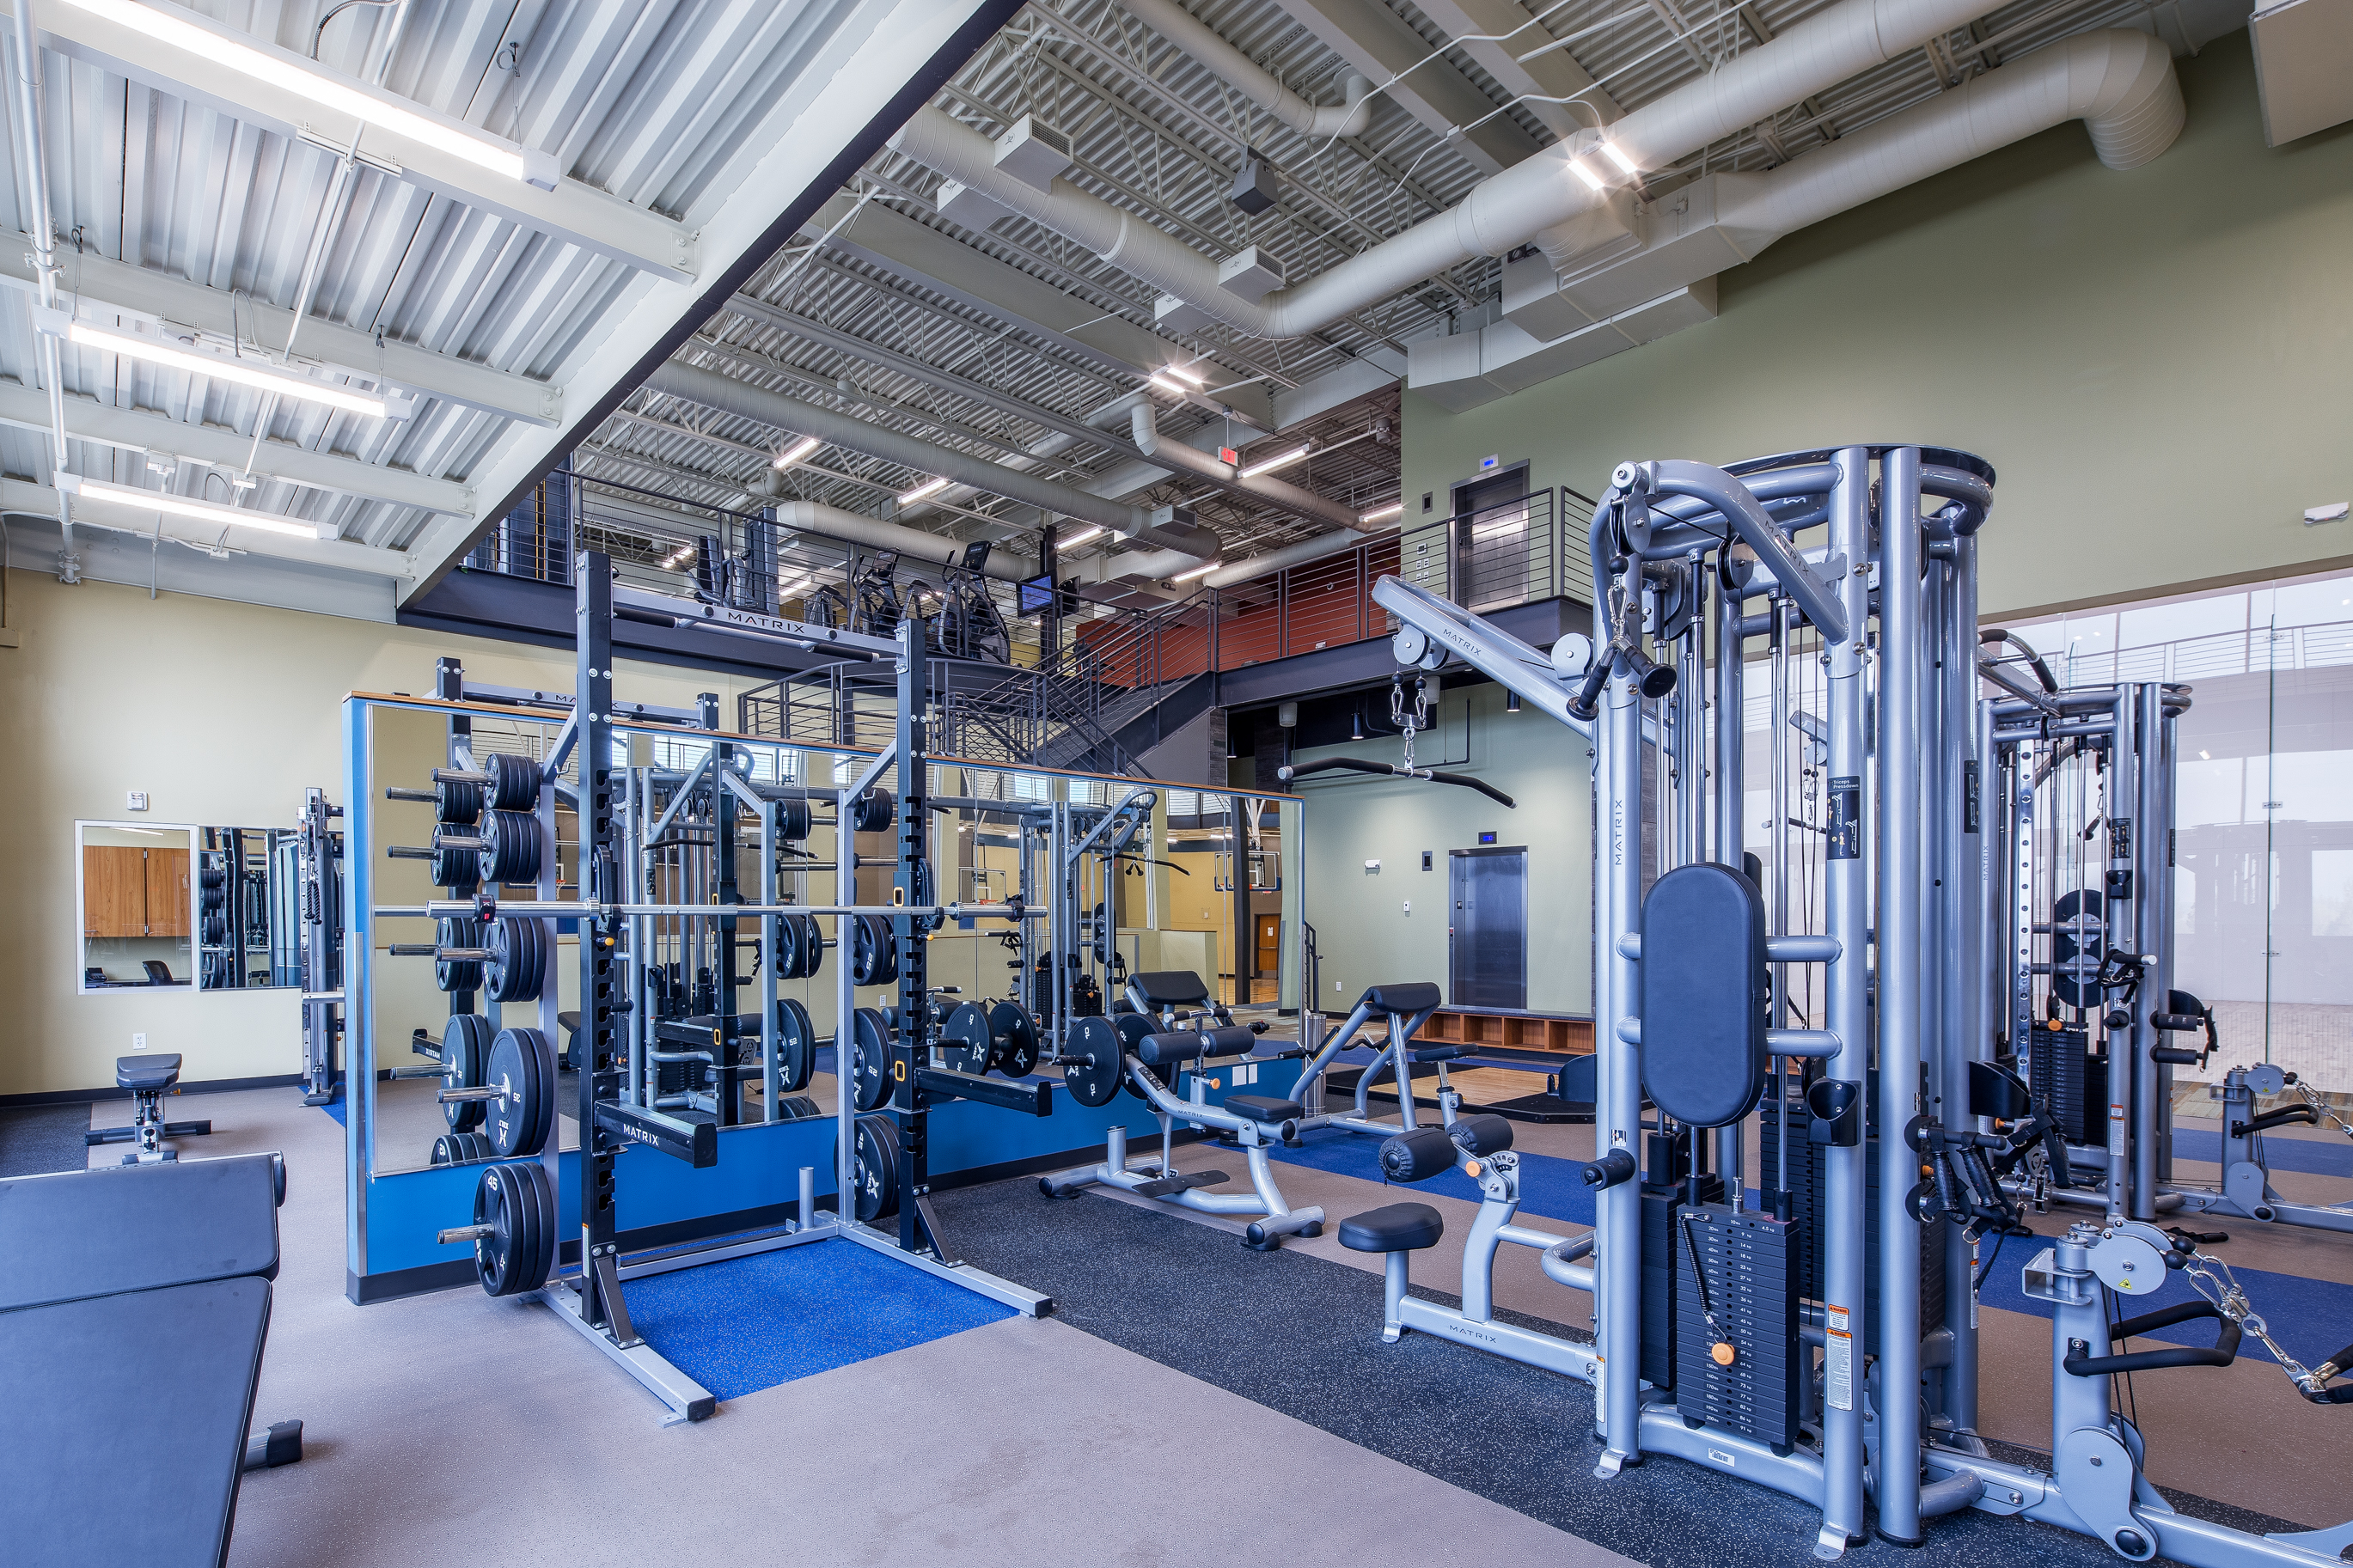 Energy Wellness Center weight lifting area